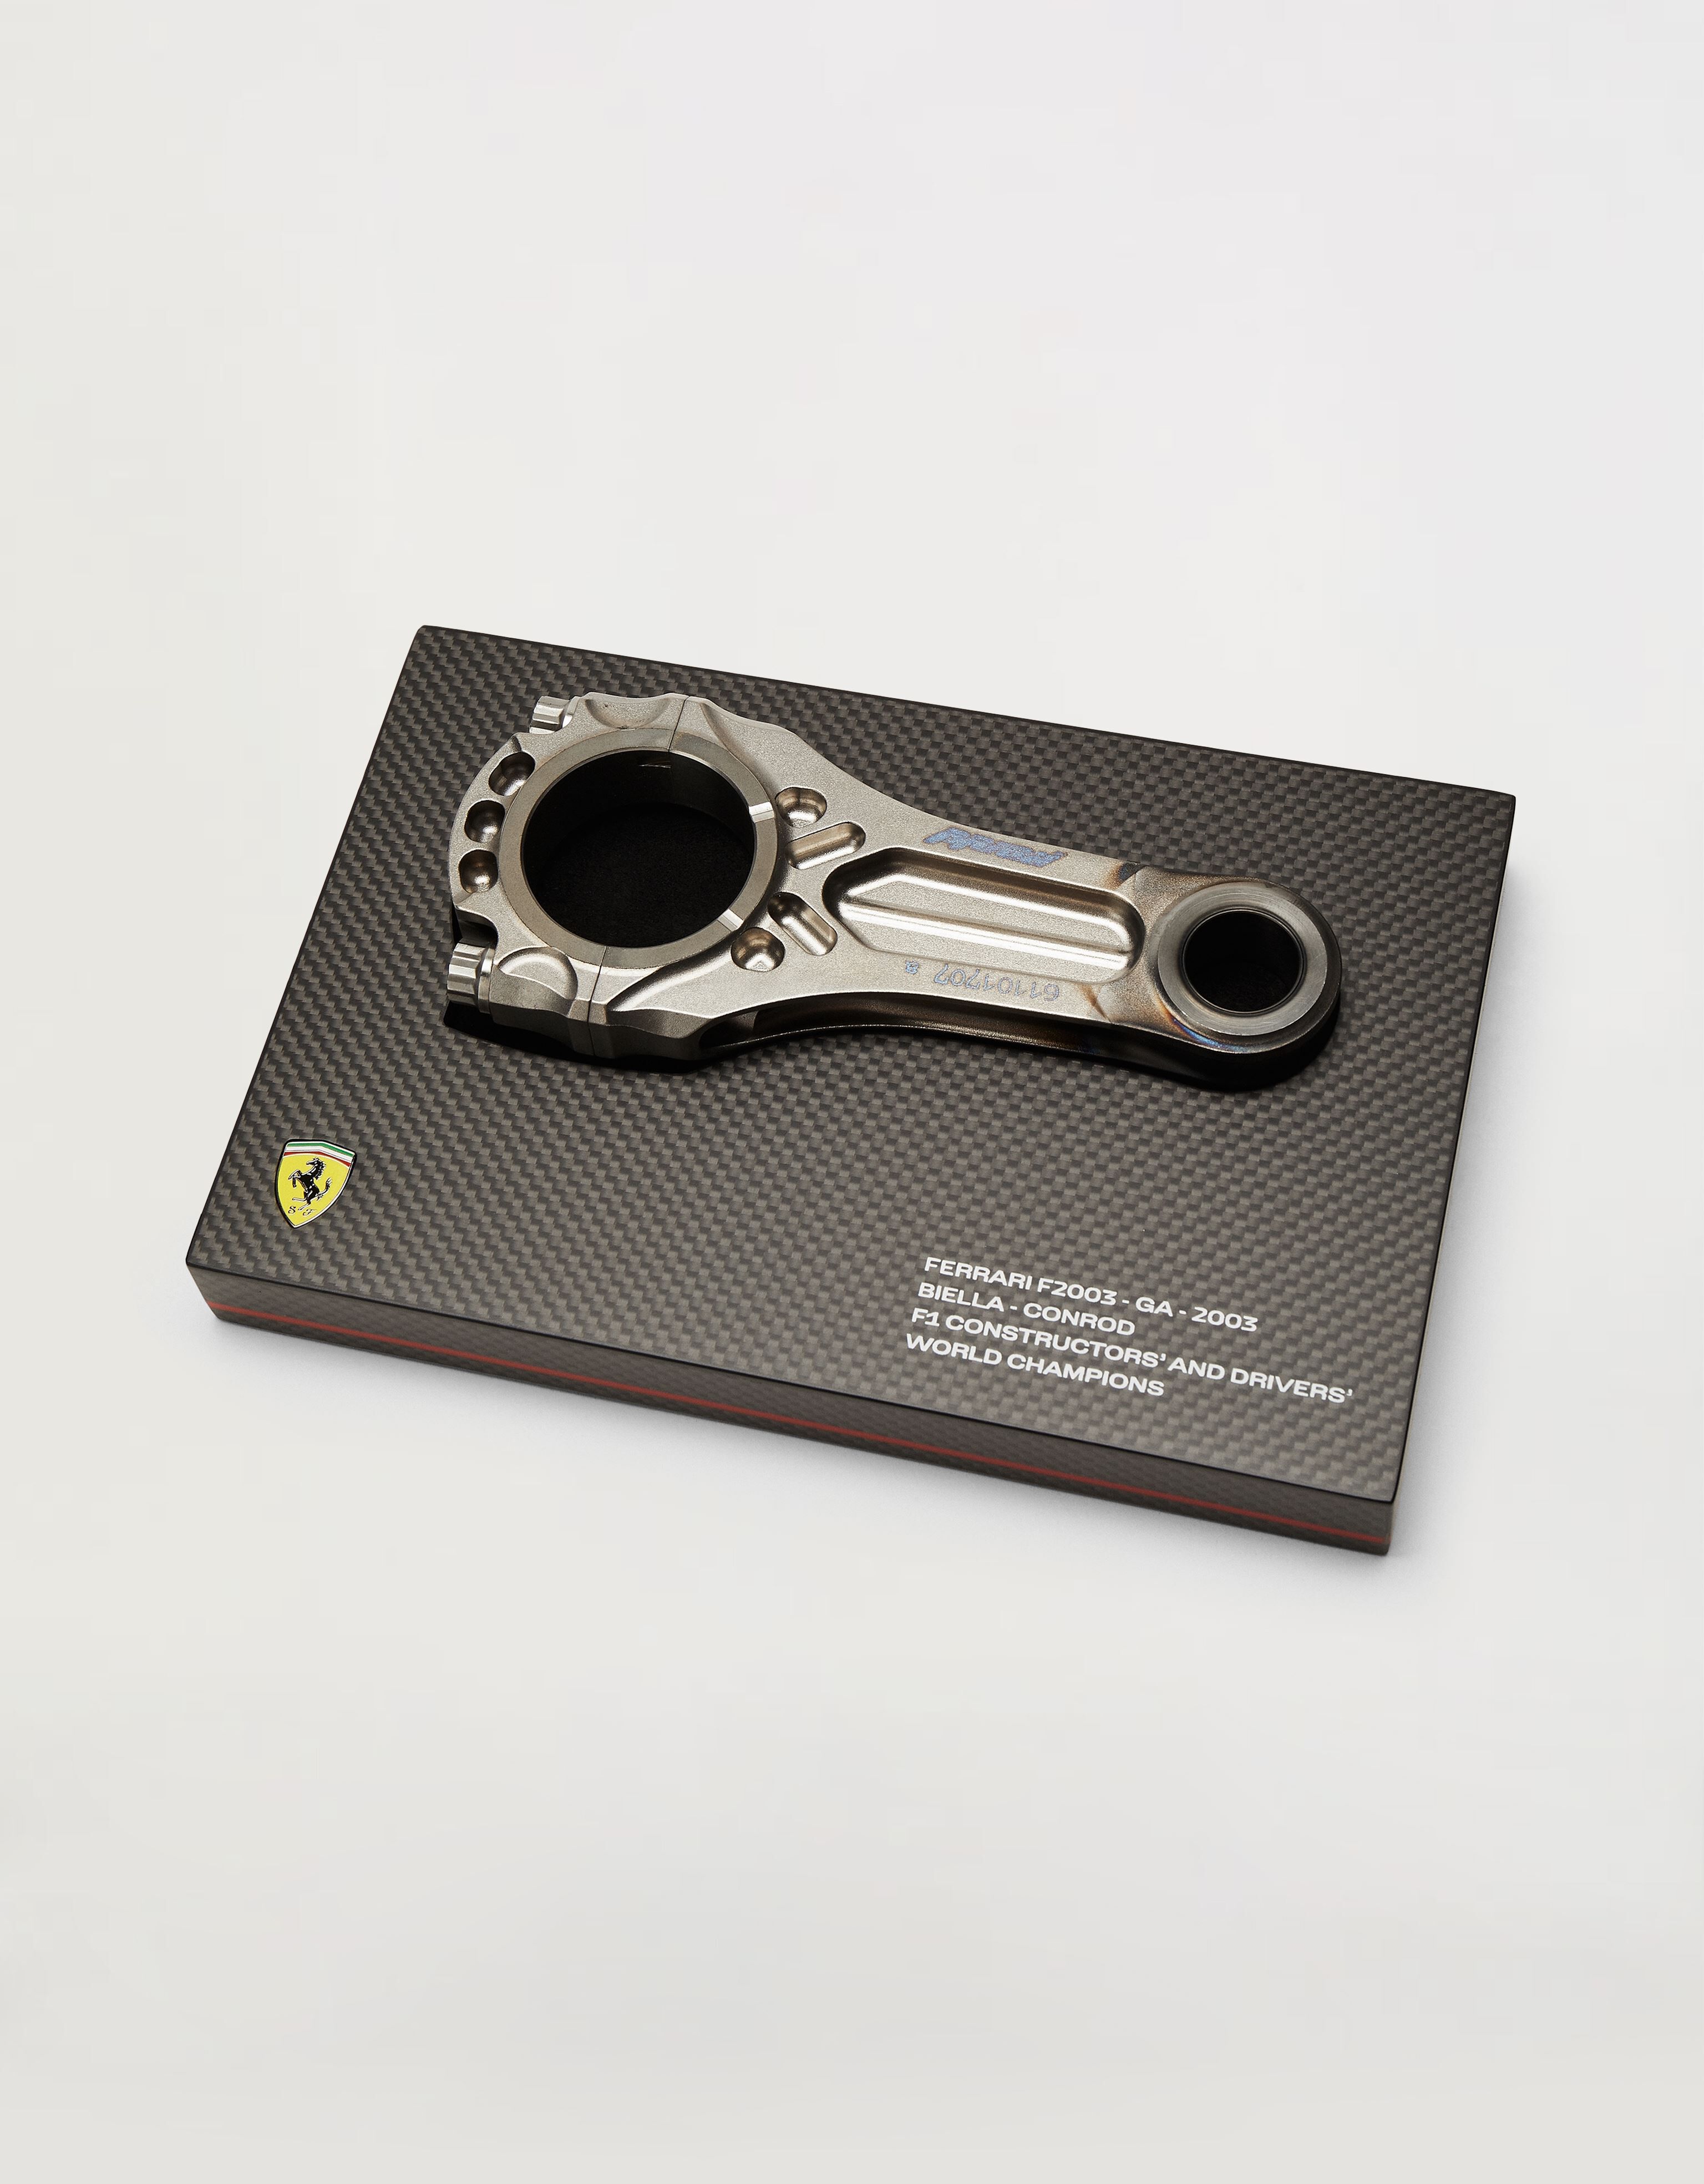 Ferrari Original piston from the F2003, winner of the 2003 Constructors' and Drivers' Championships Rosso Corsa F1135f